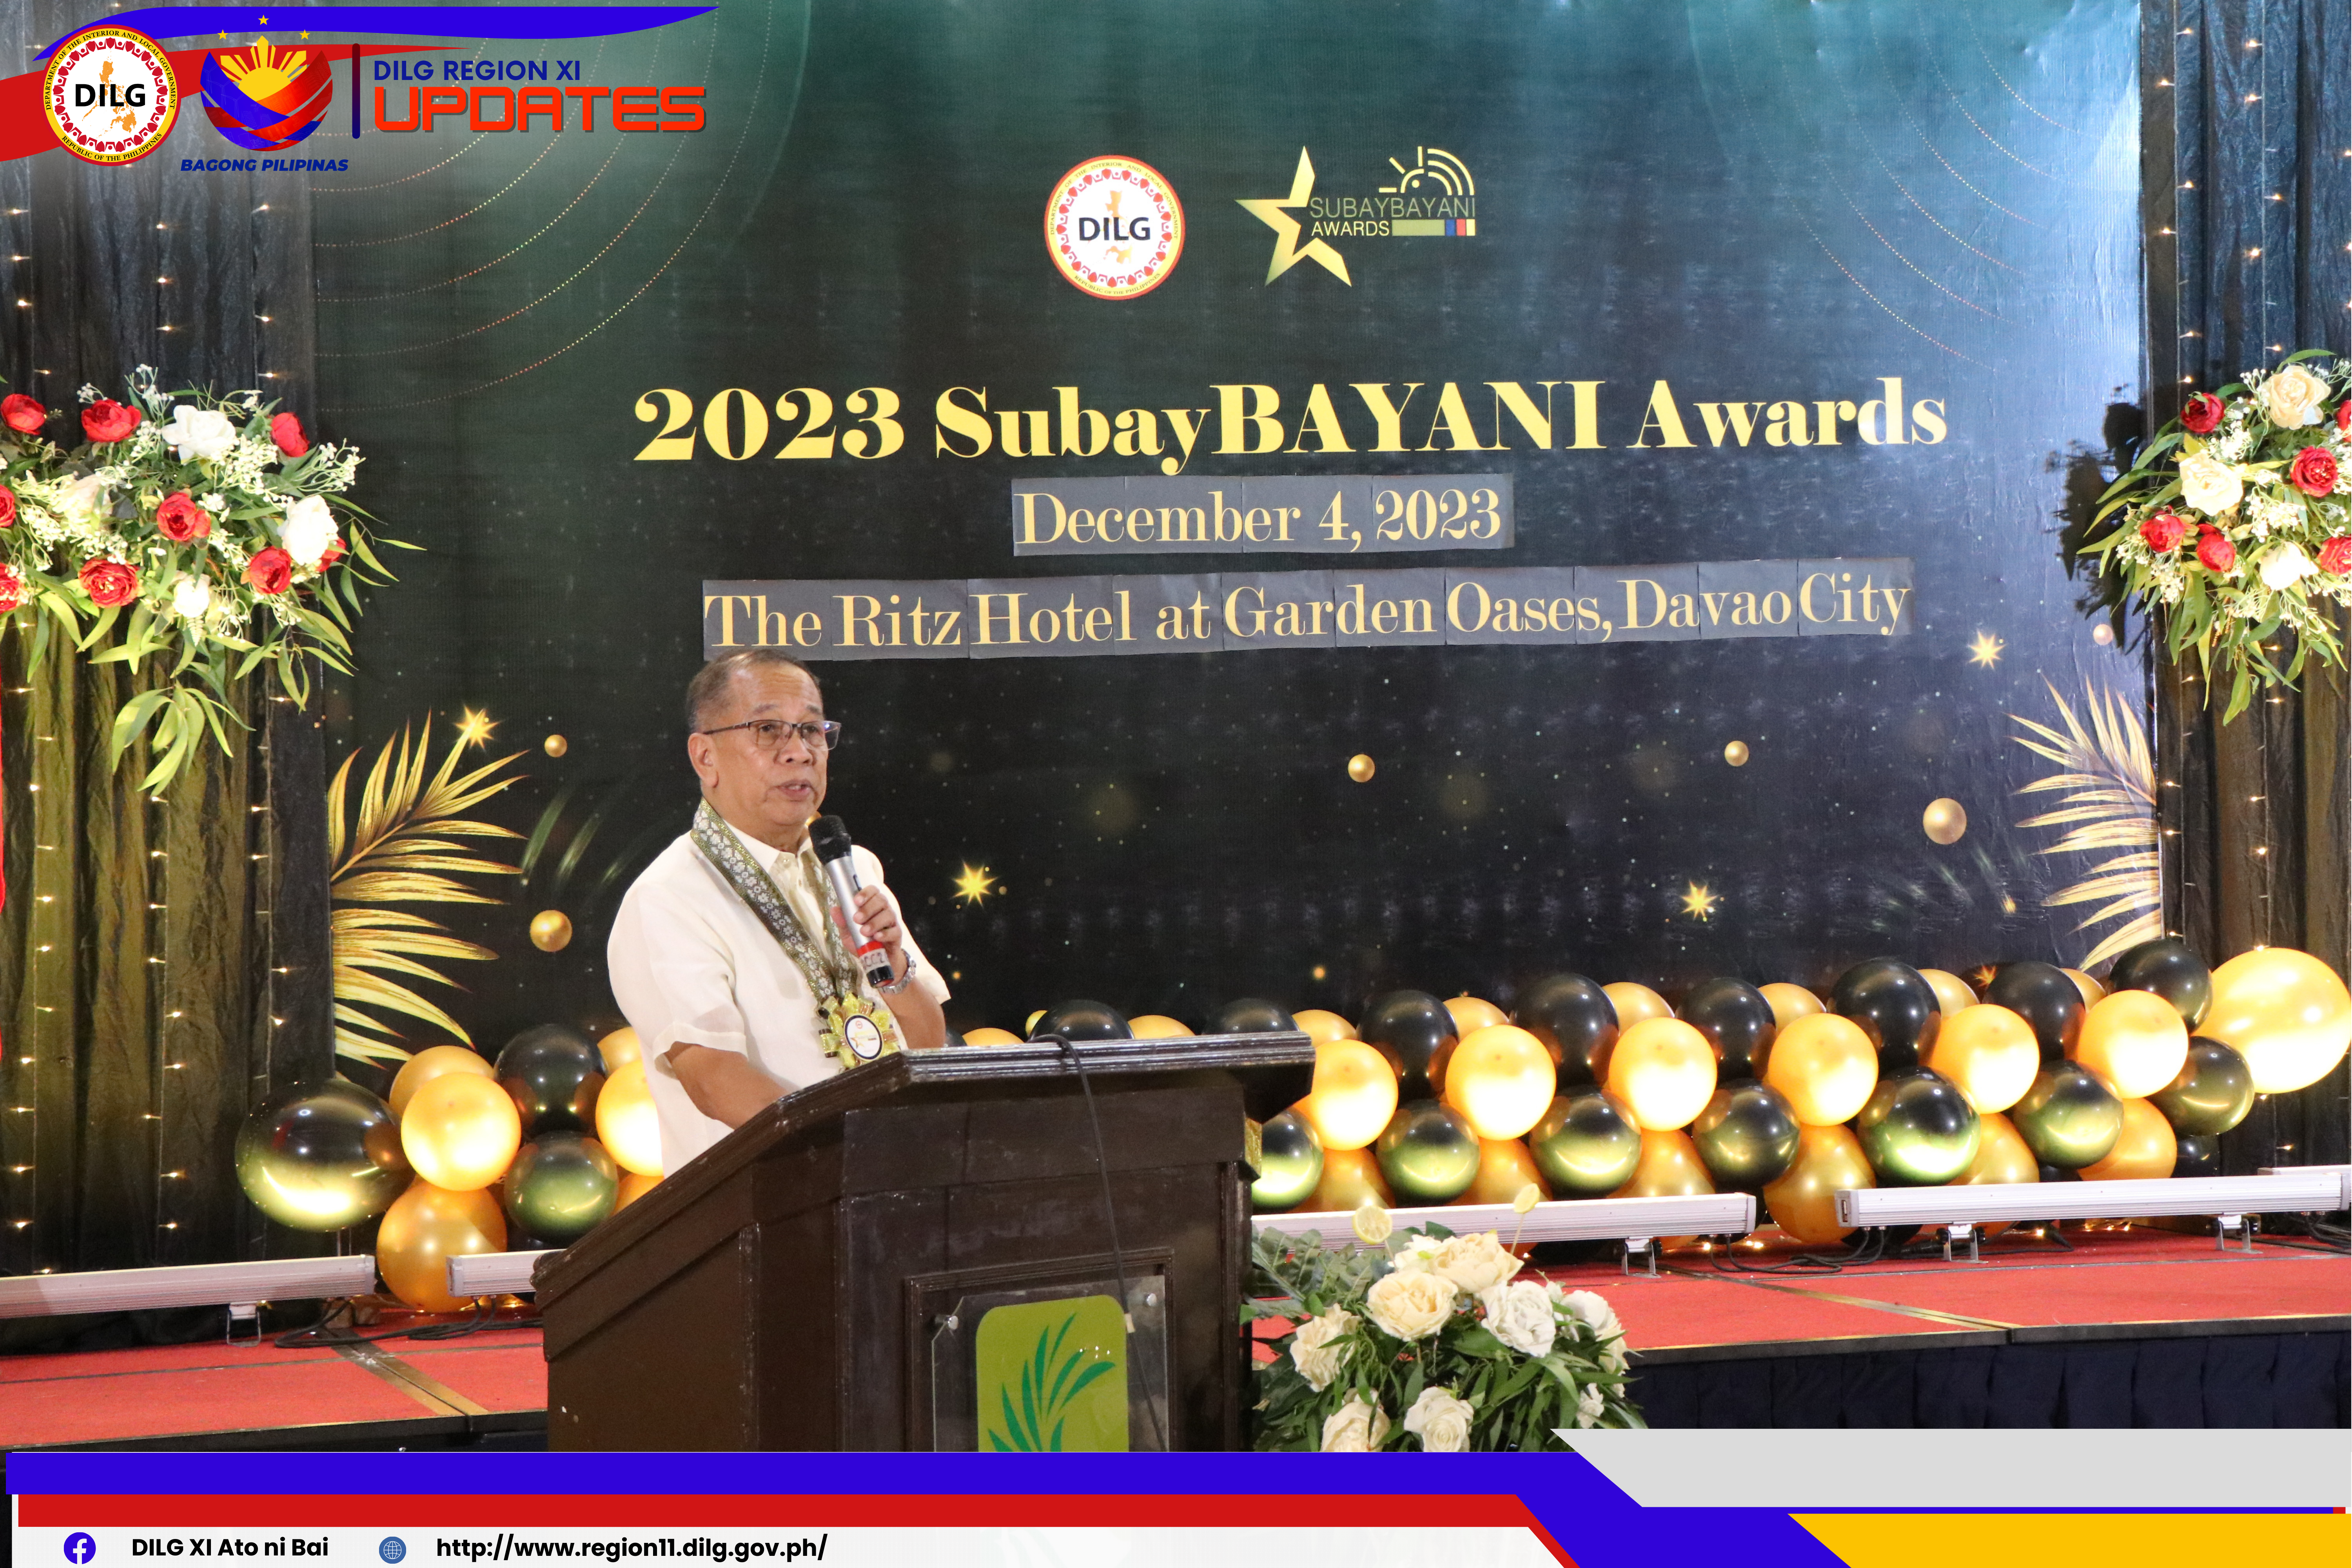 DILG XI-PDMU conducted the 2023 SubayBAYANI Awarding for Best Performing Monitors